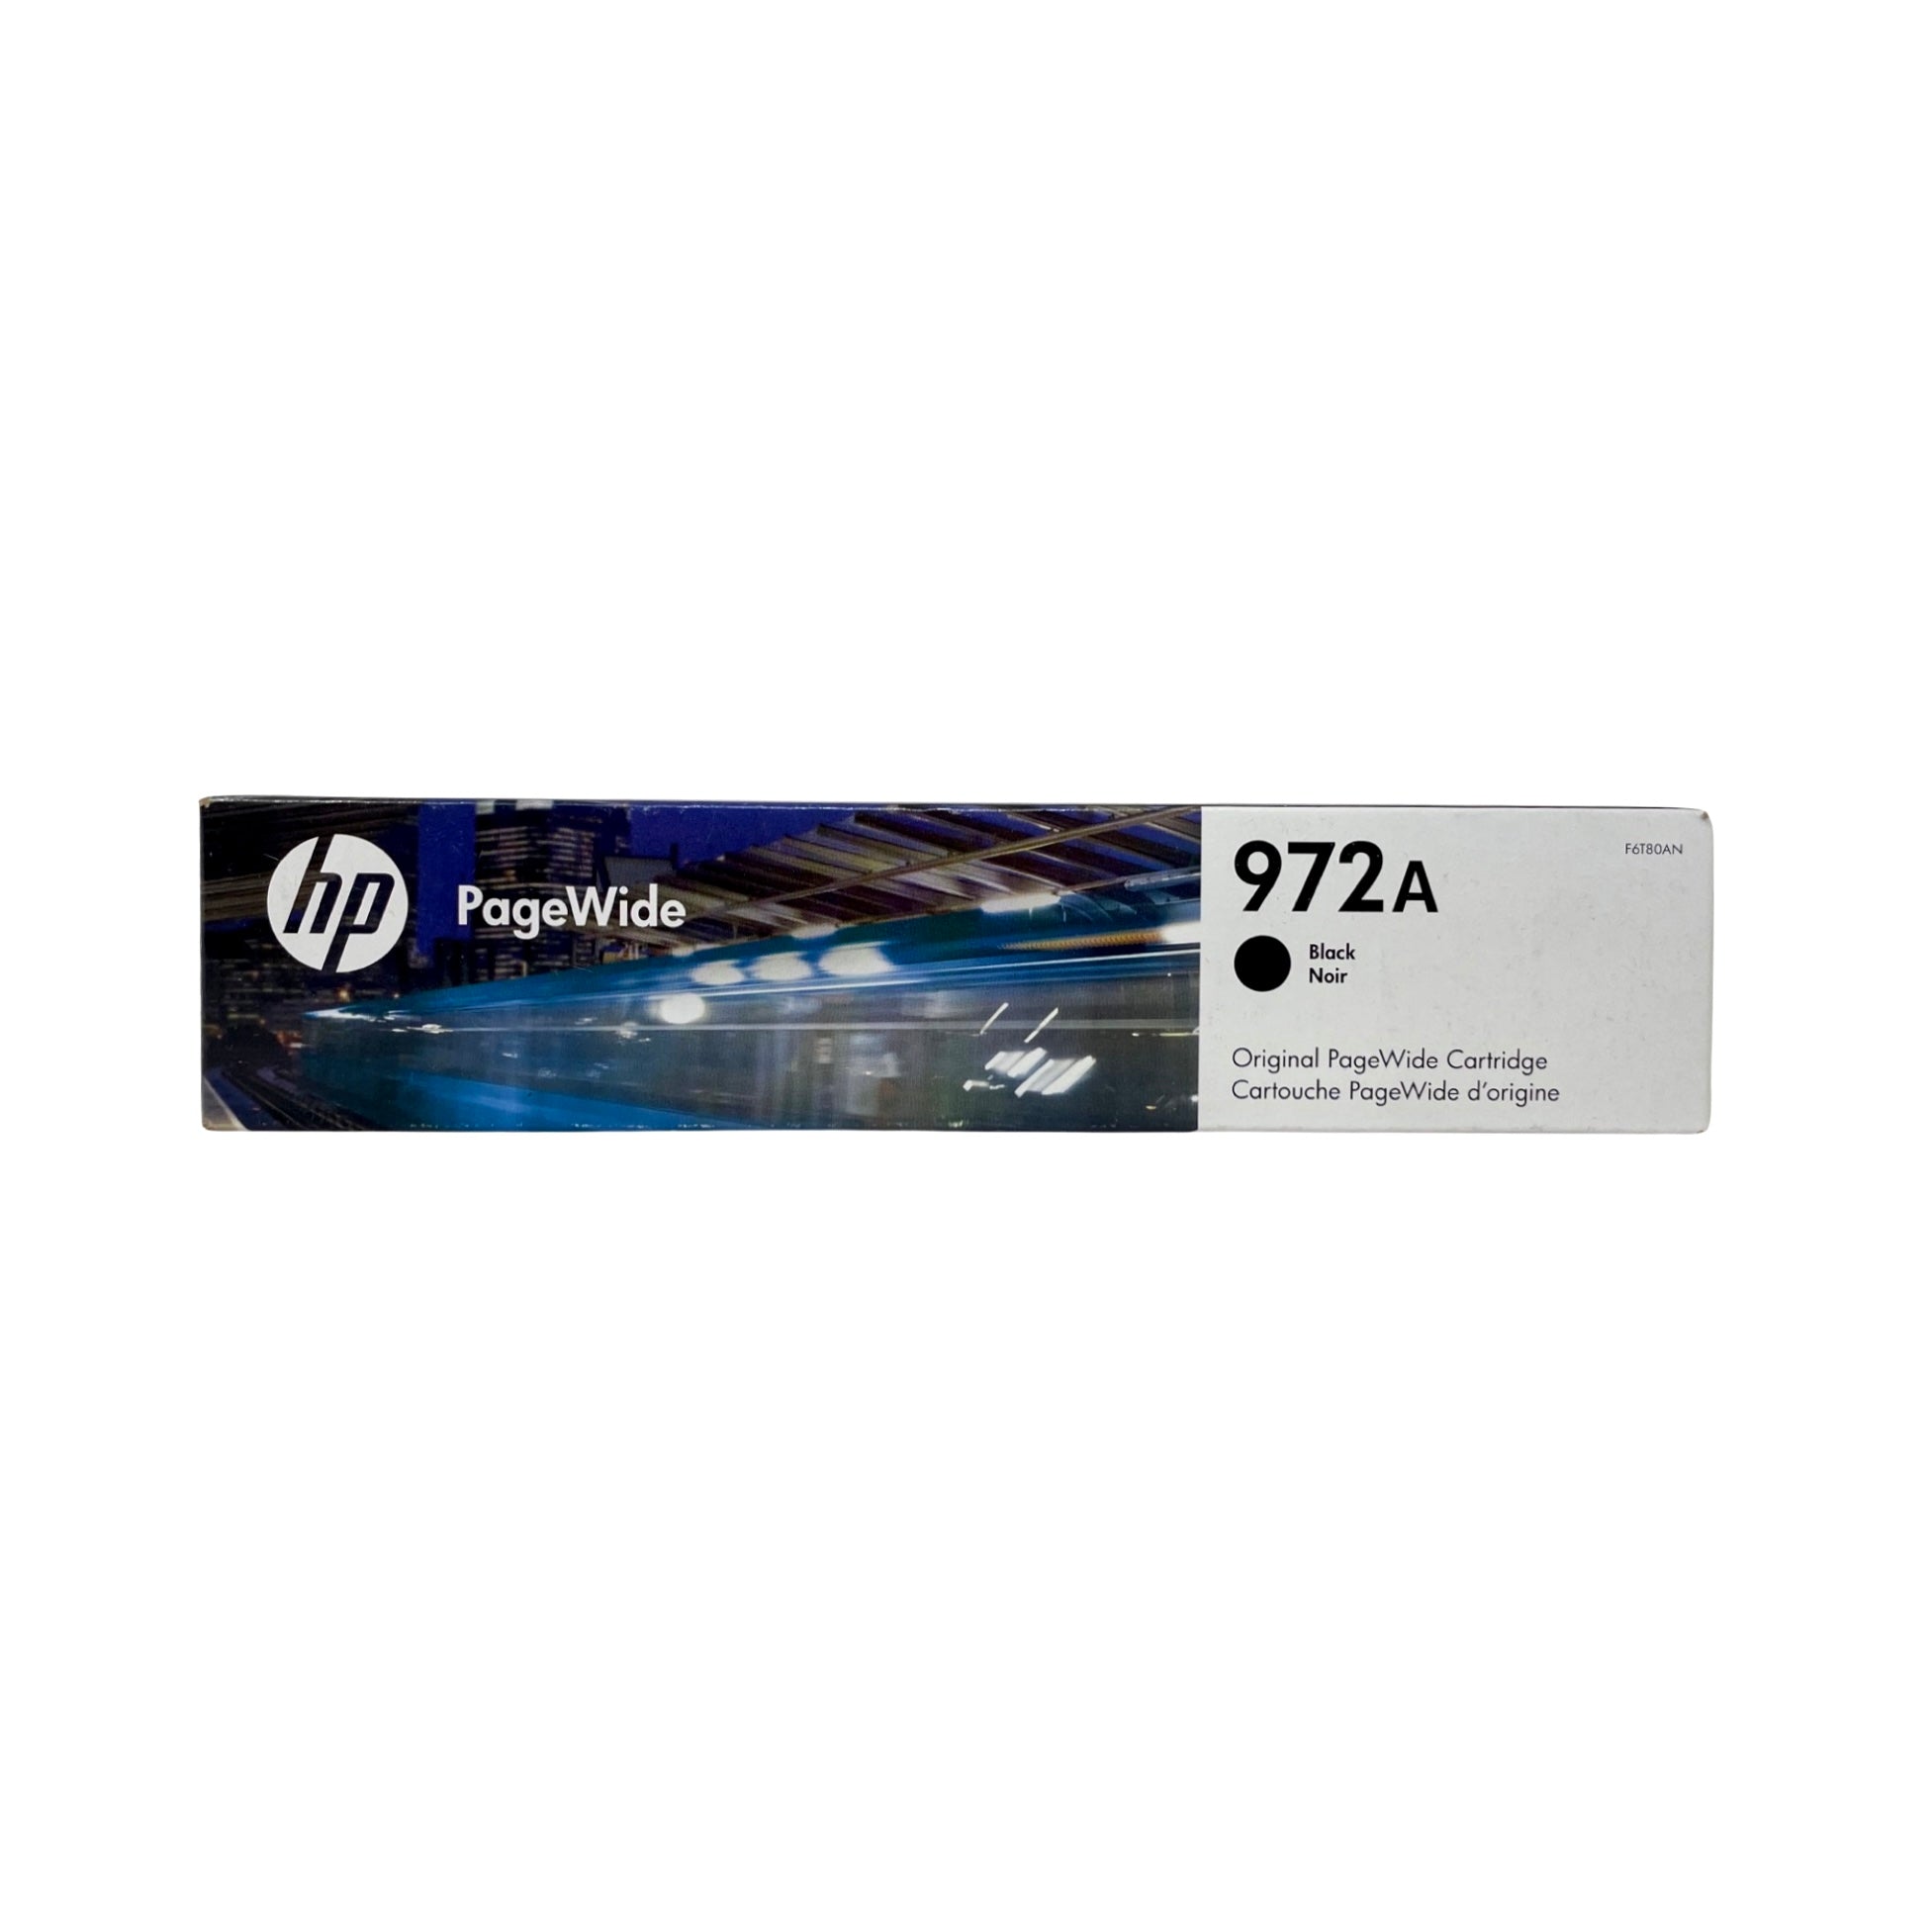 Genuine HP 972A PageWide Black Ink Cartridge F6T80AN